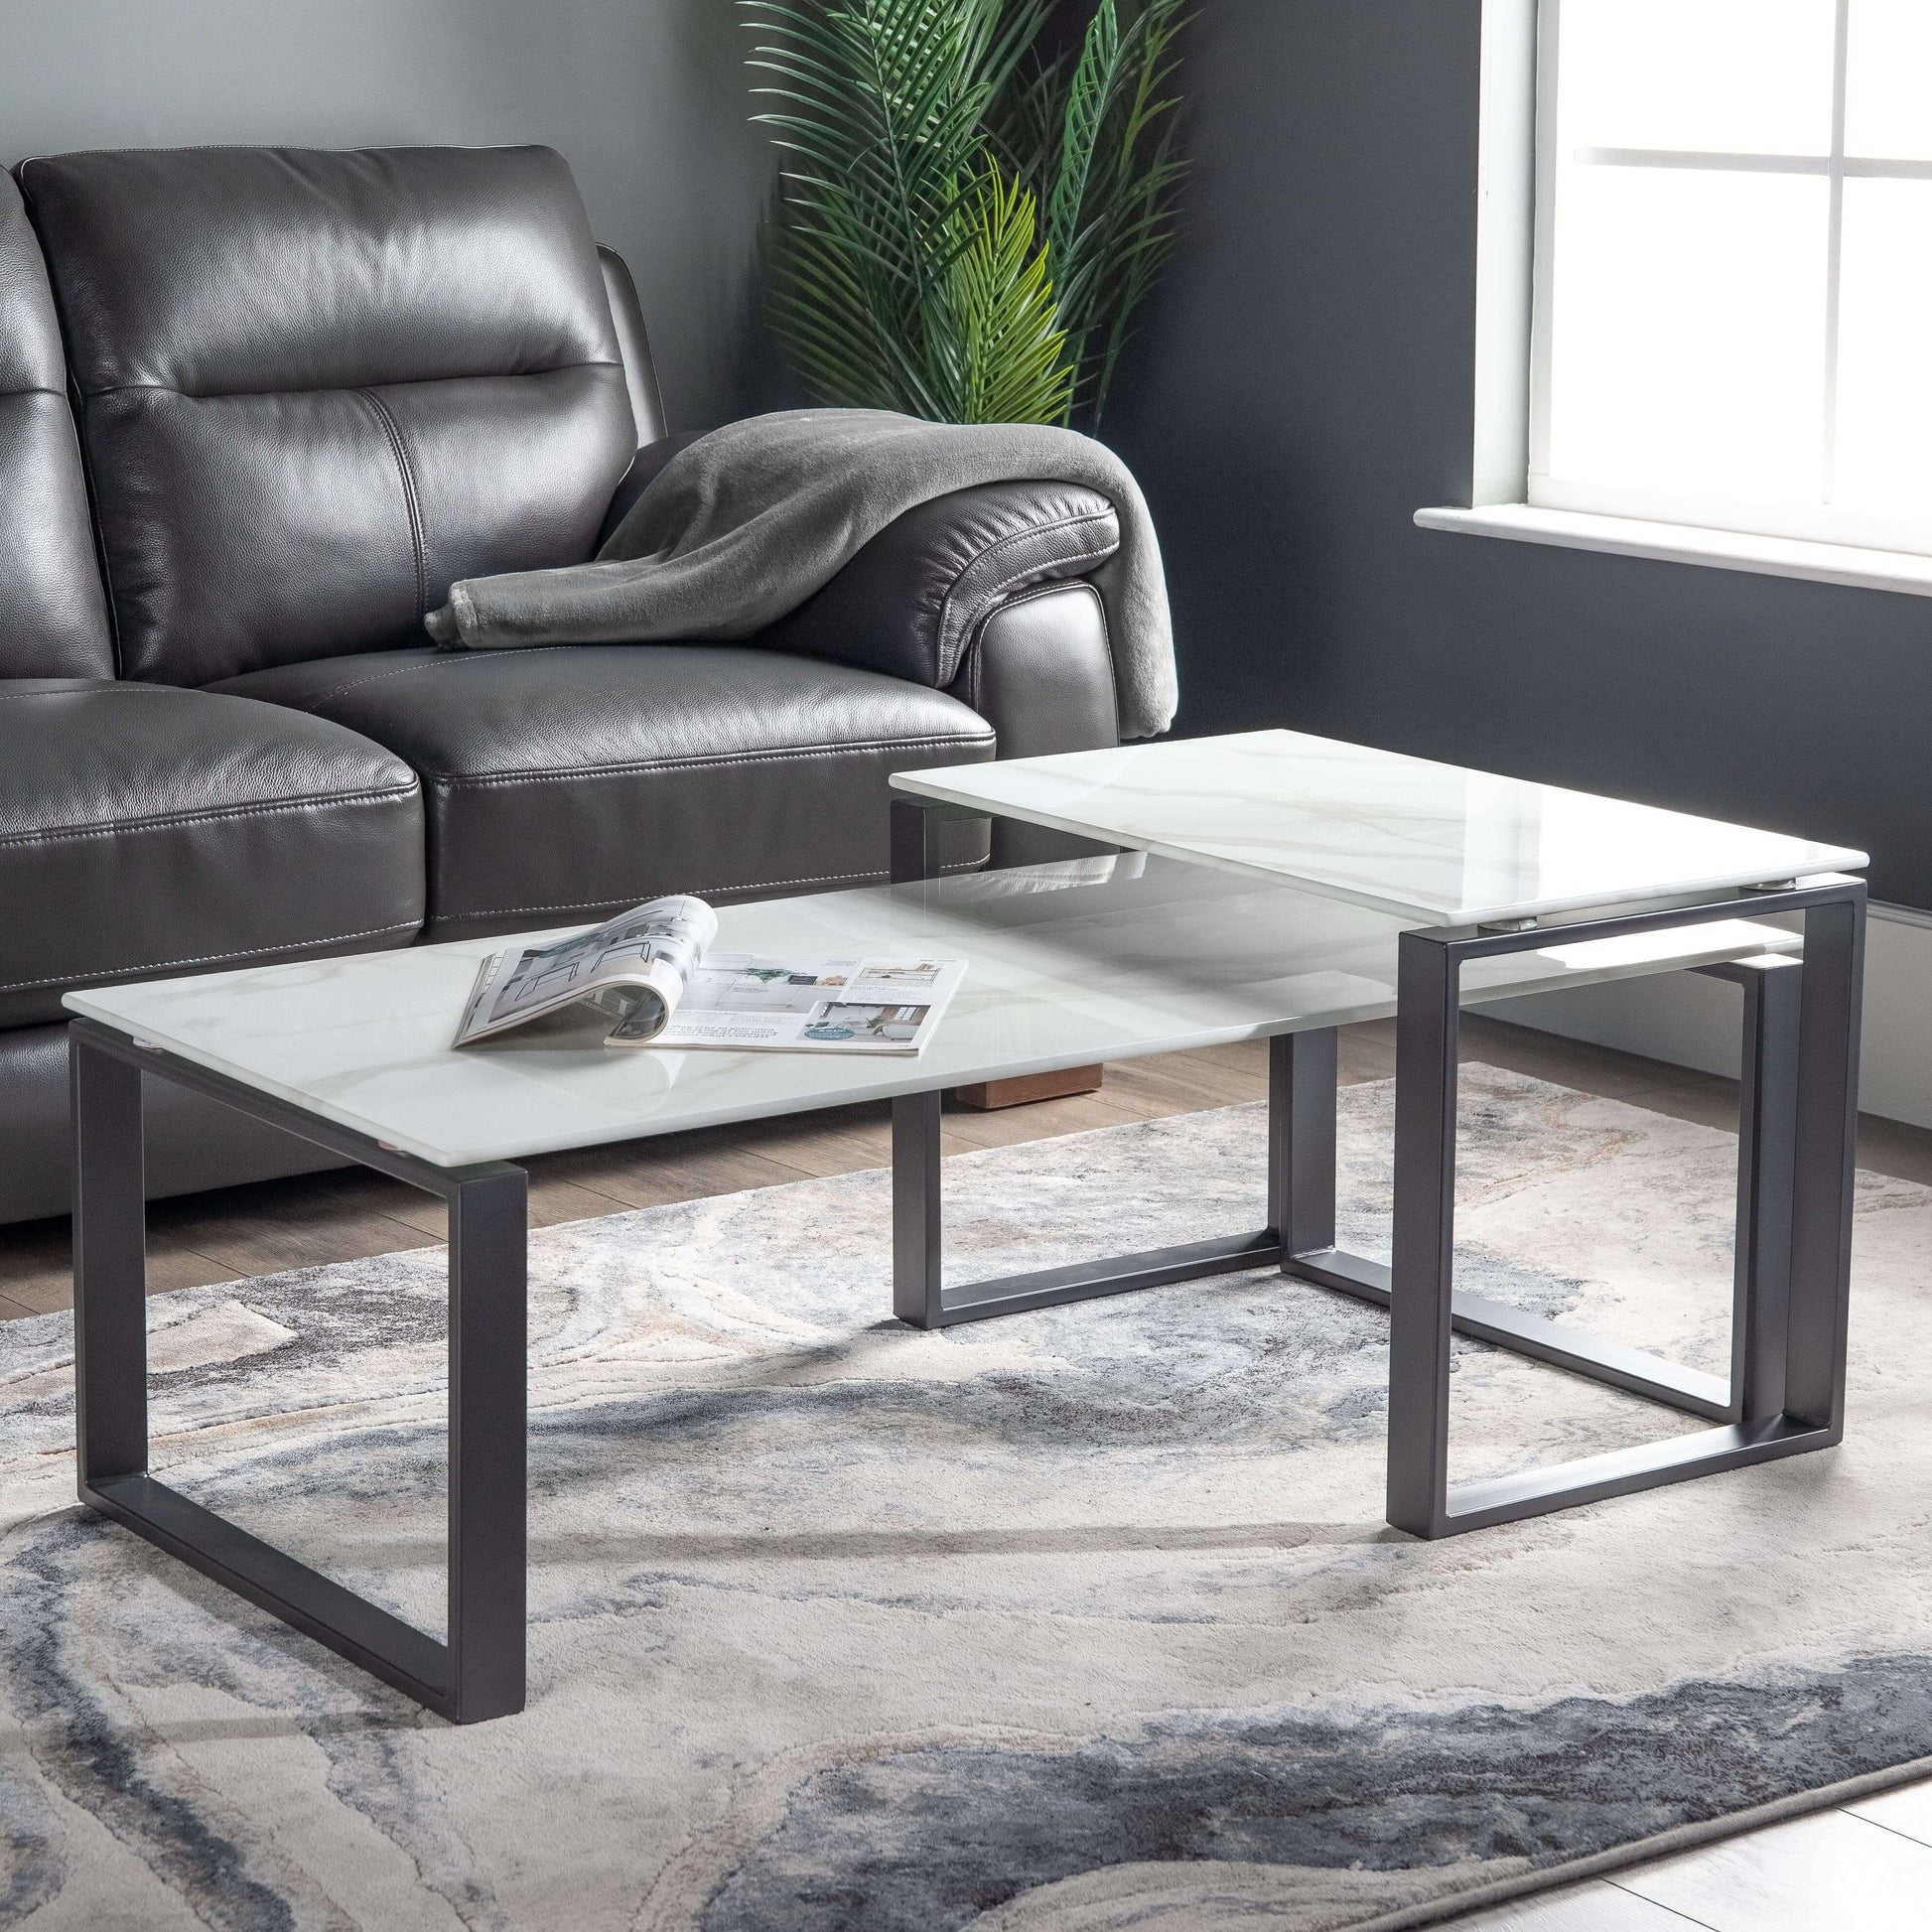 Furniture  -  Axel Coffee Table Set  -  60003714